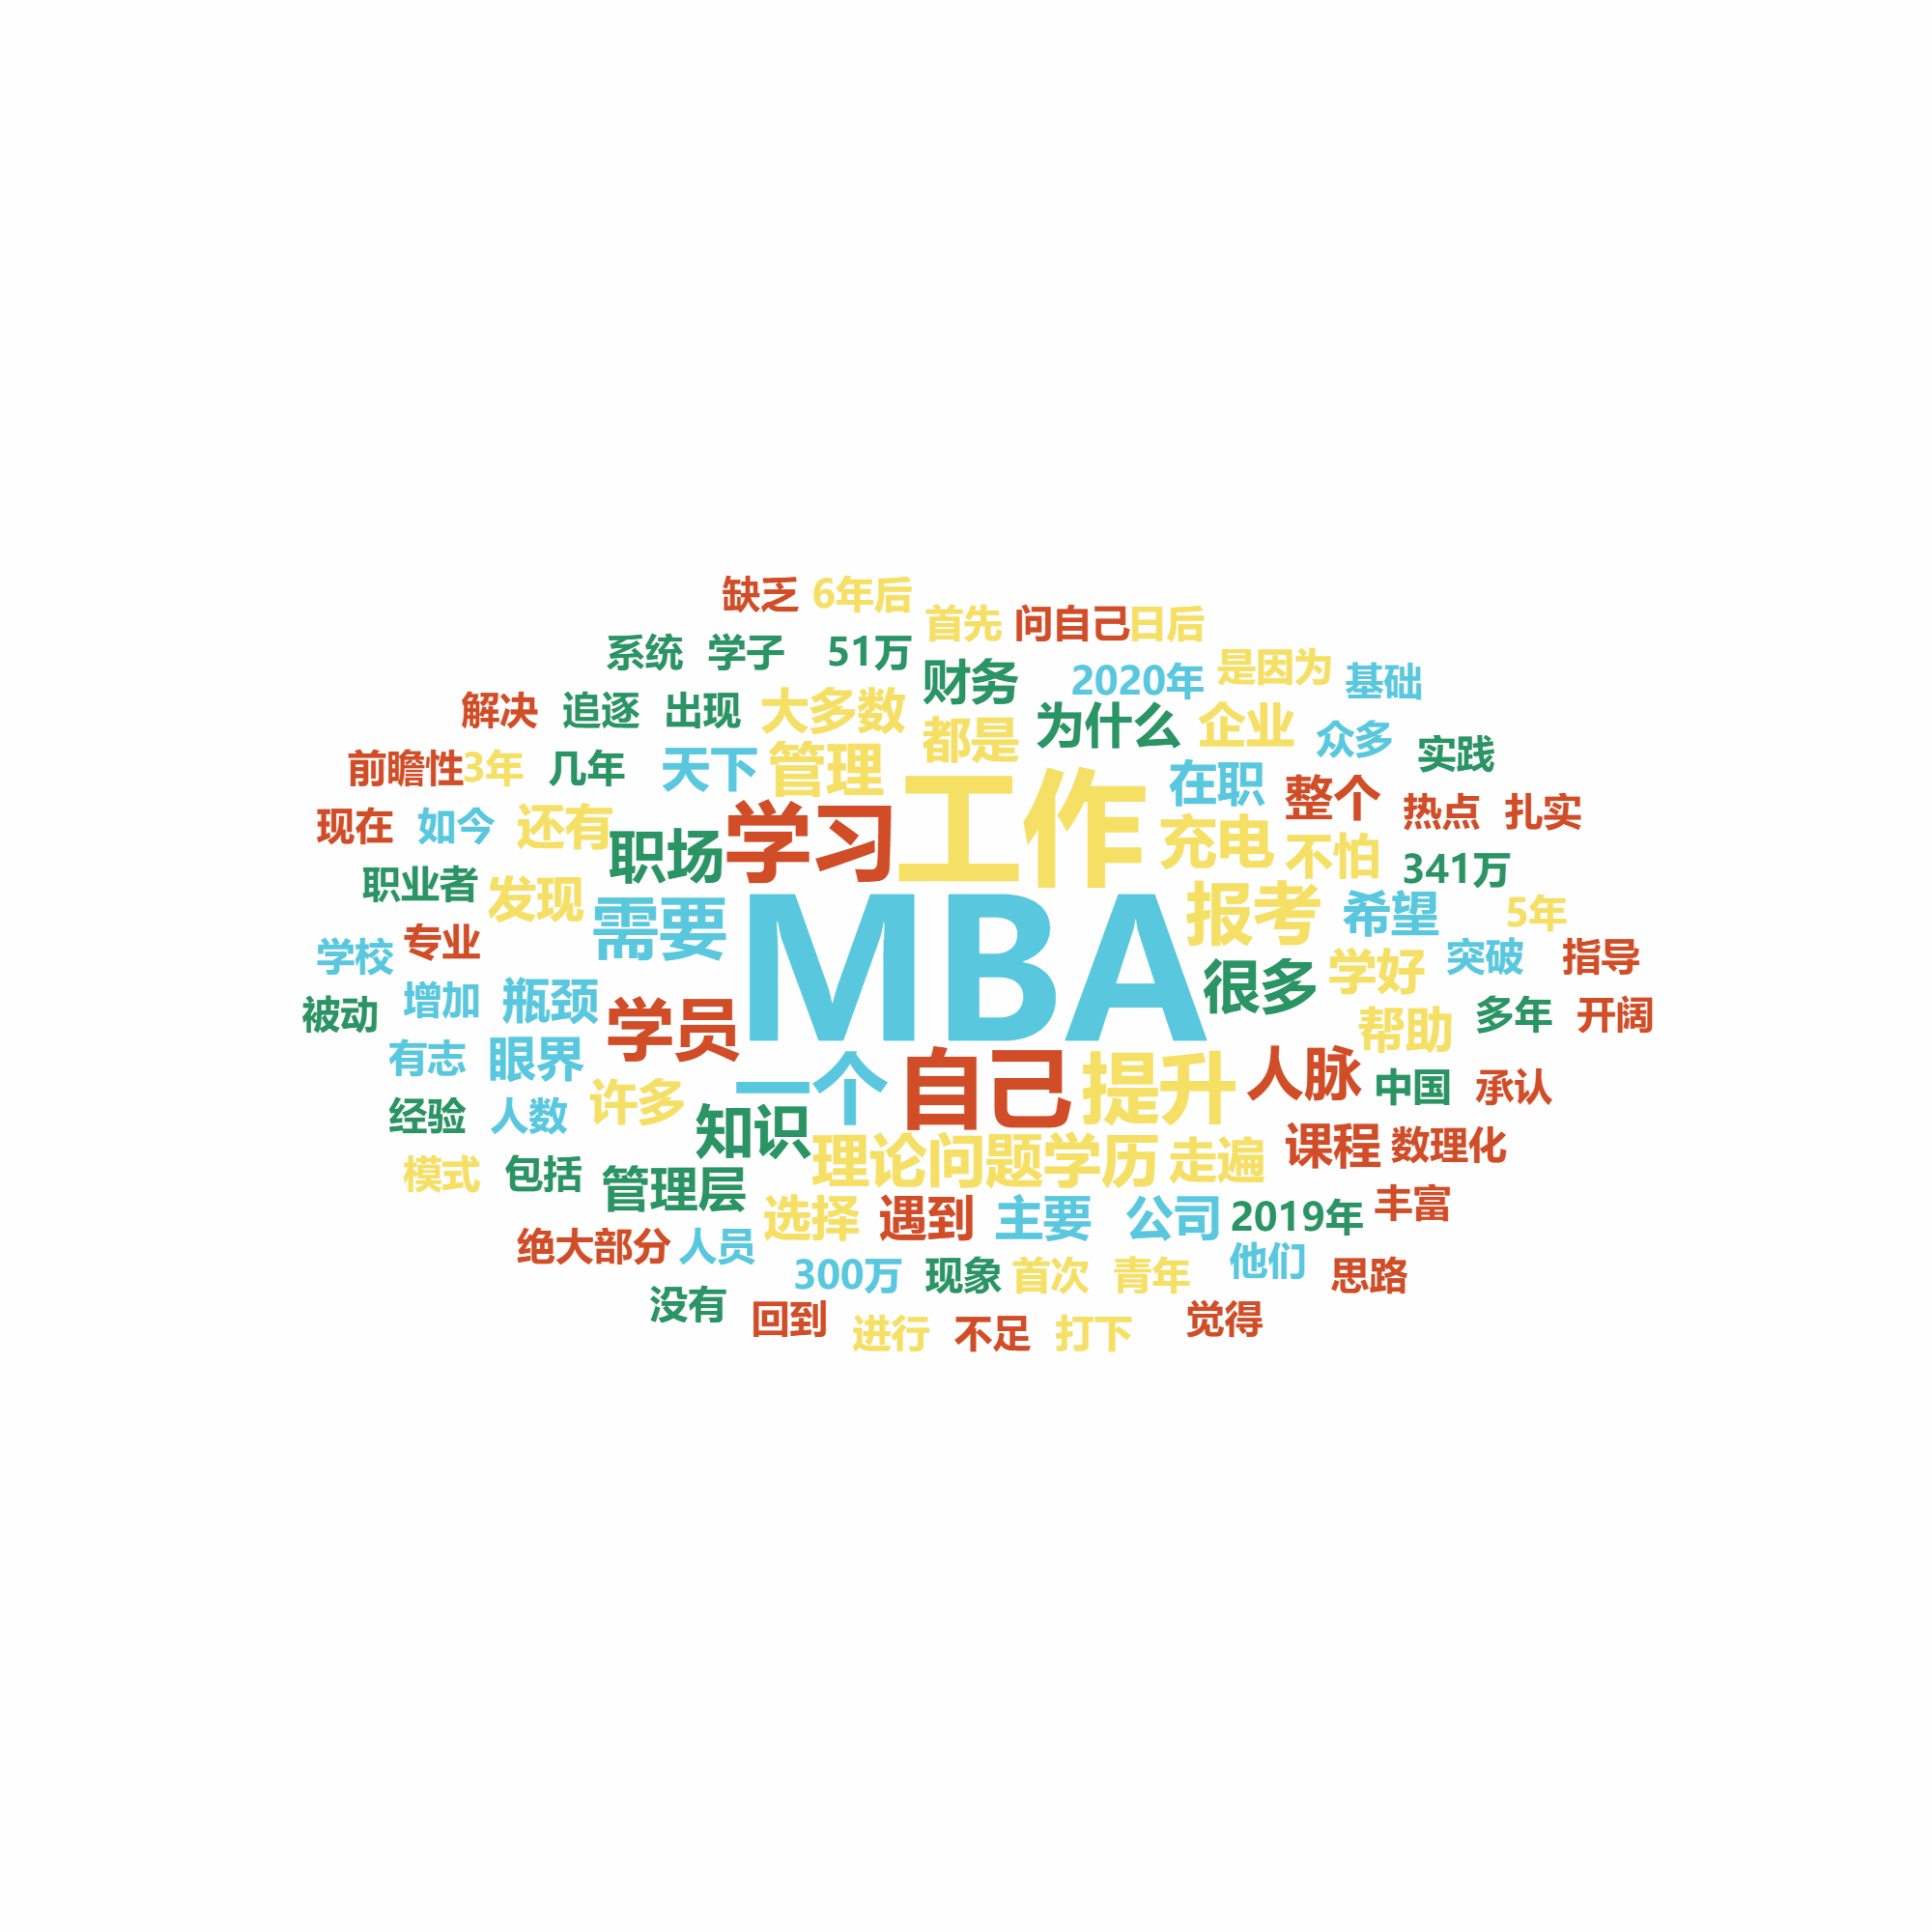 国际MBA